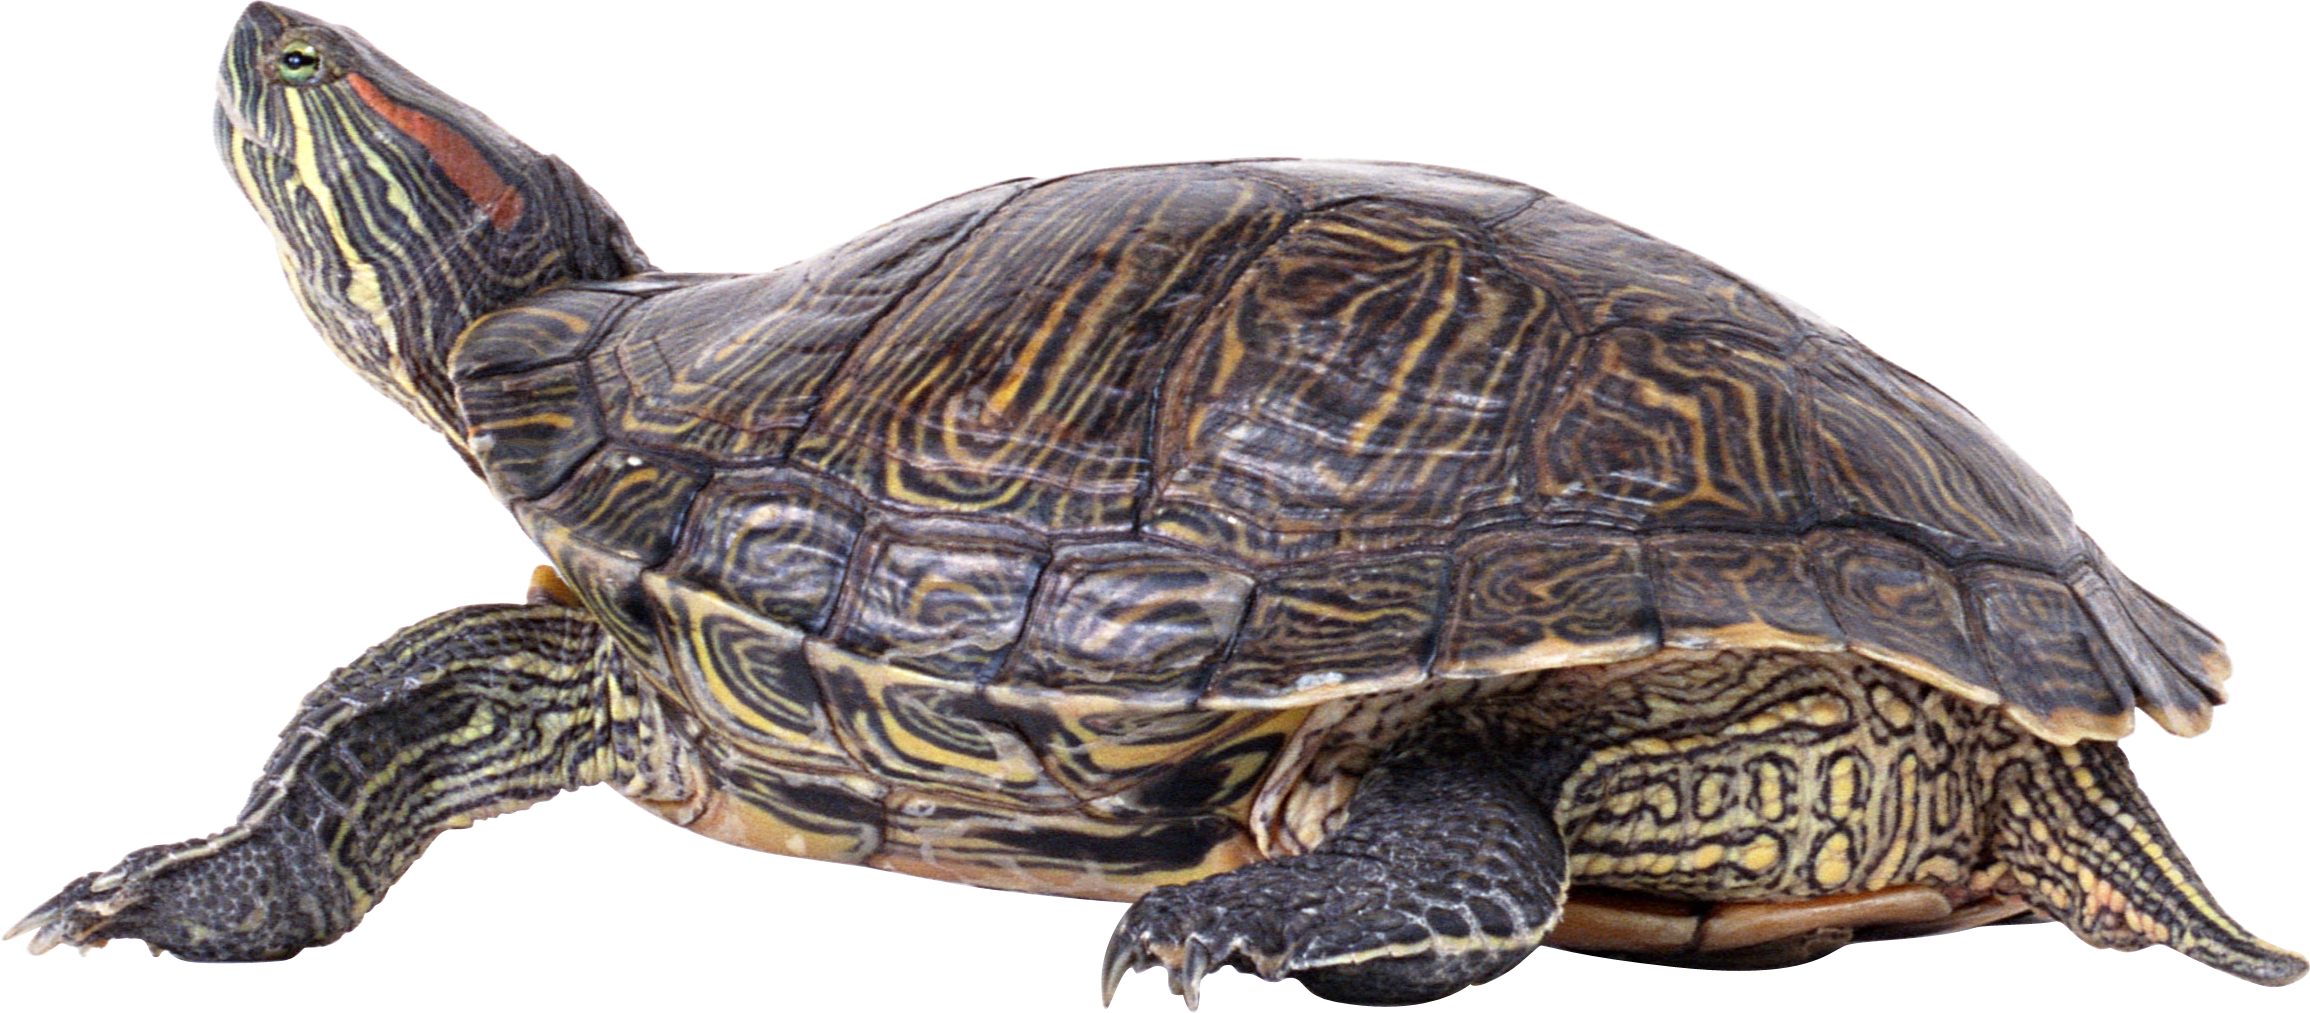 Turtle Pic Sea Free Download Image PNG Image